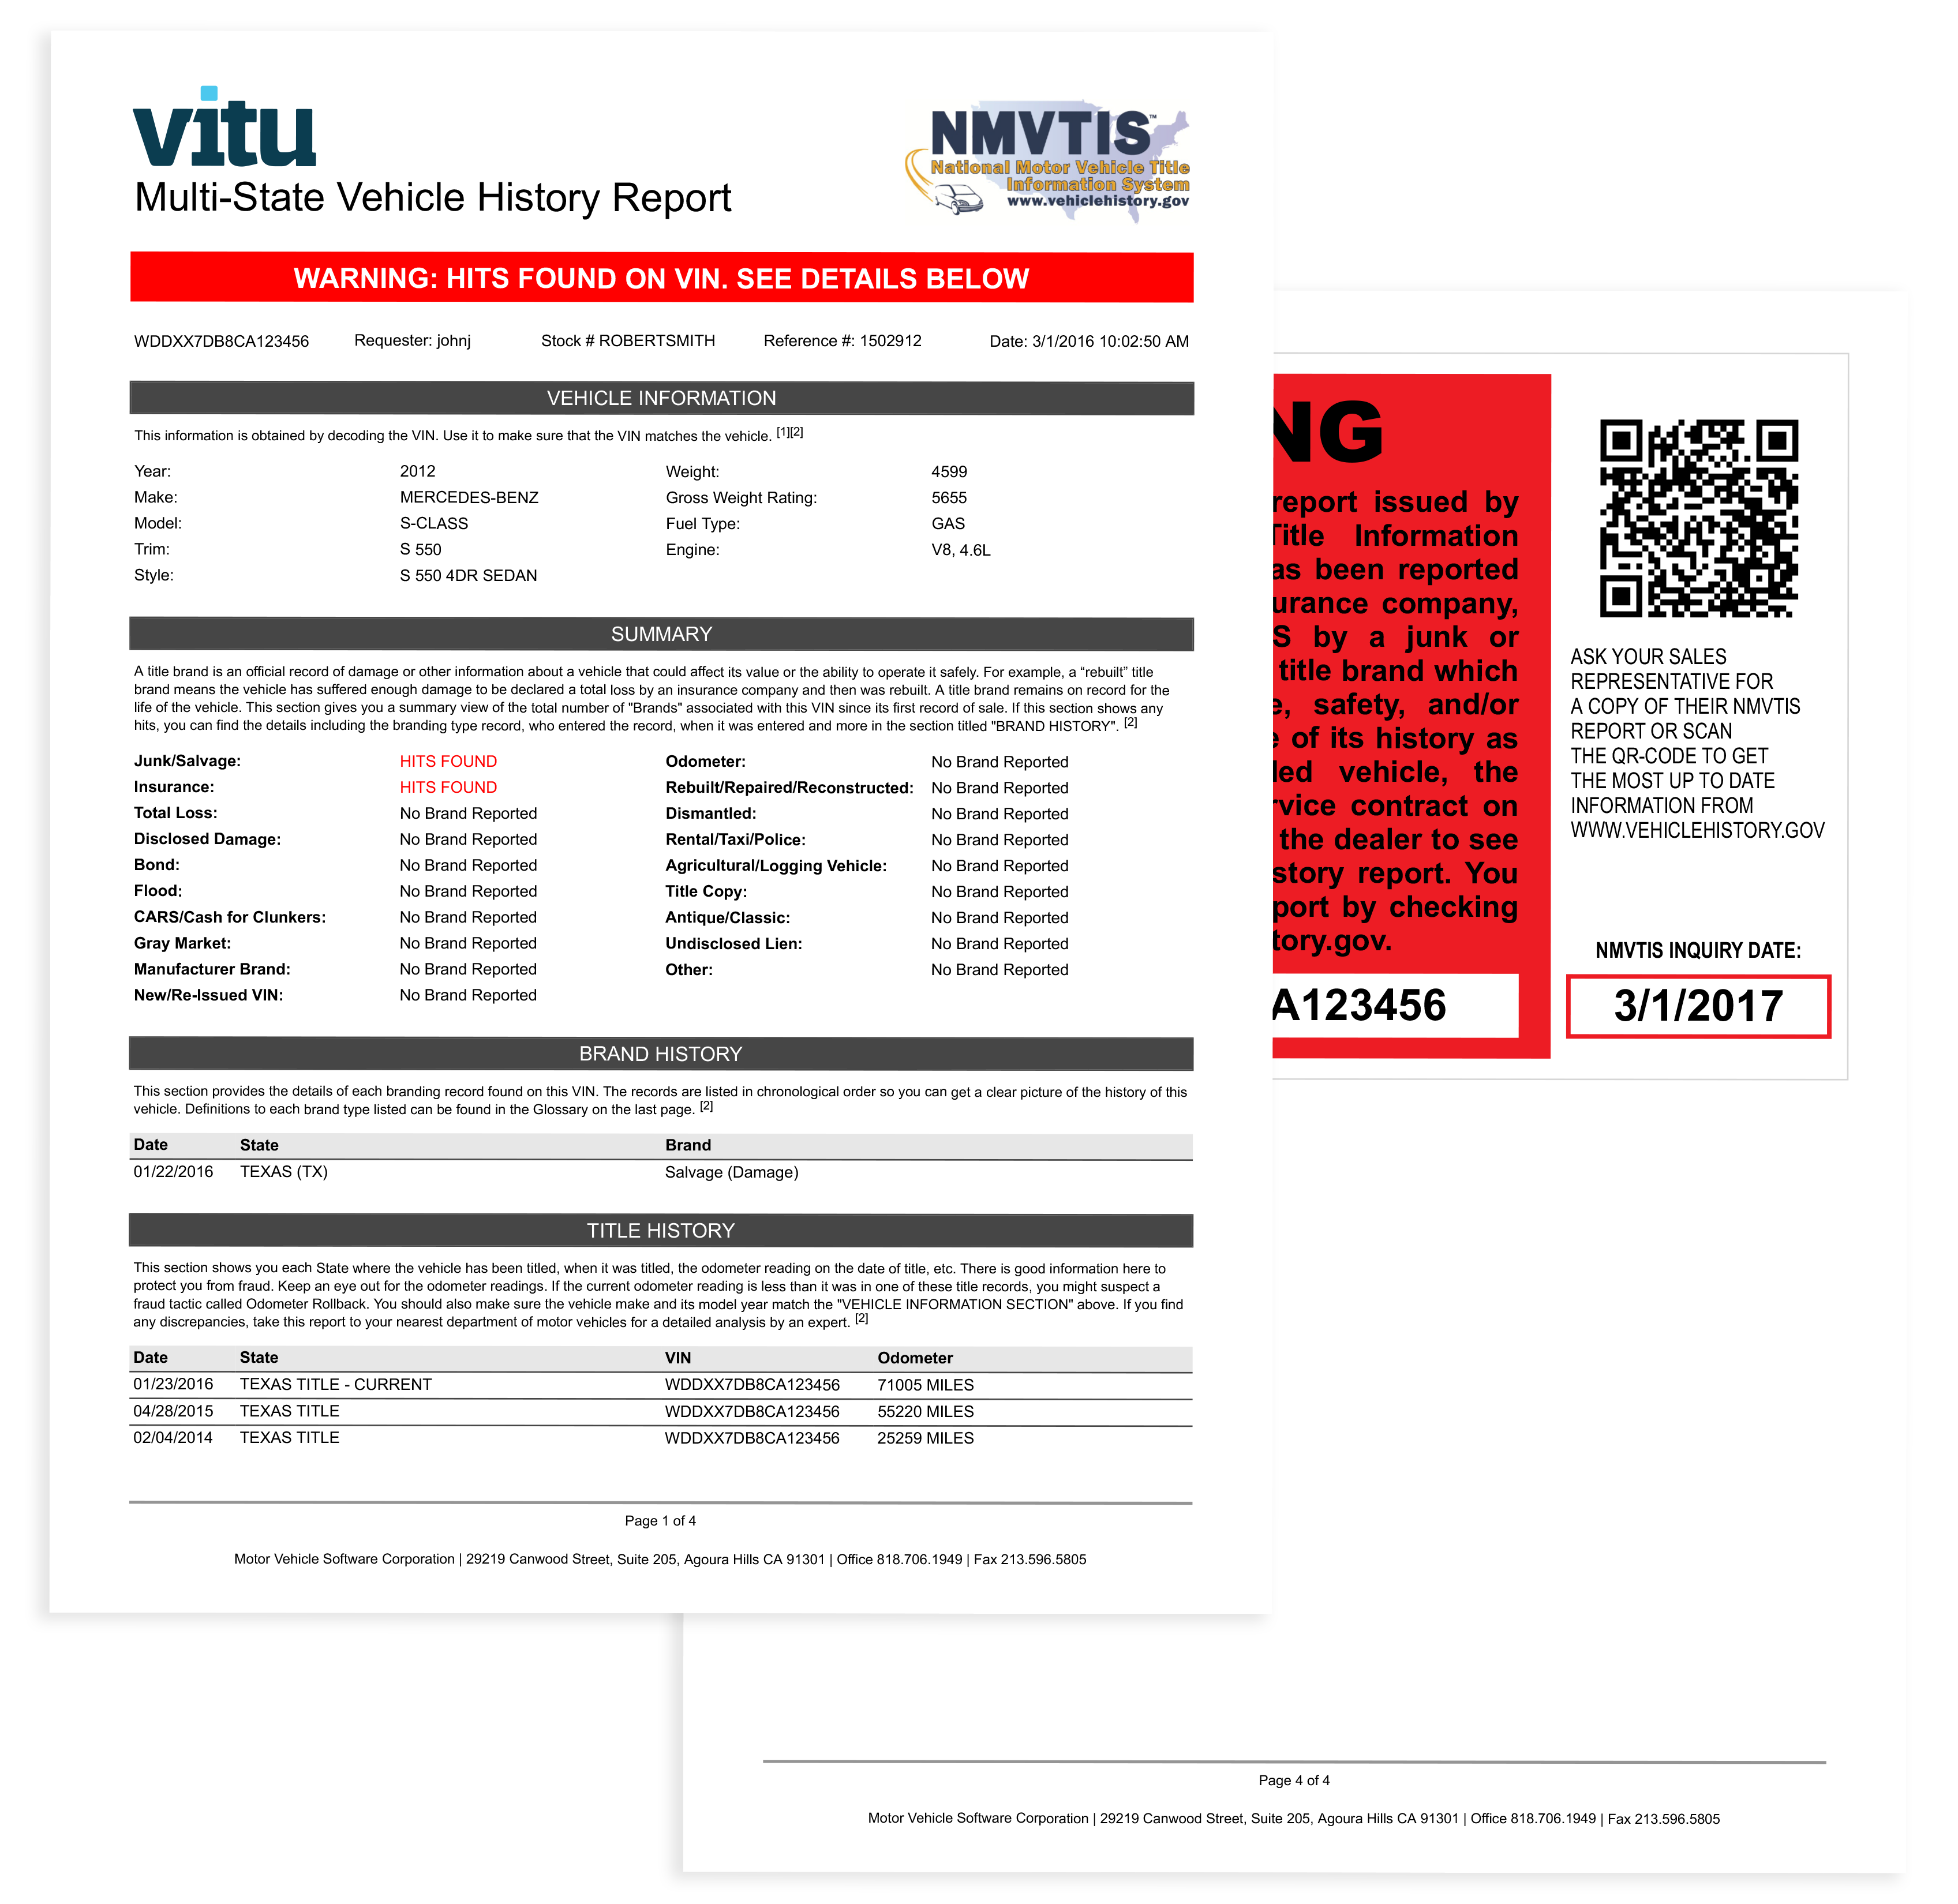 NMVTIS: Multi-state Vehicle History Report